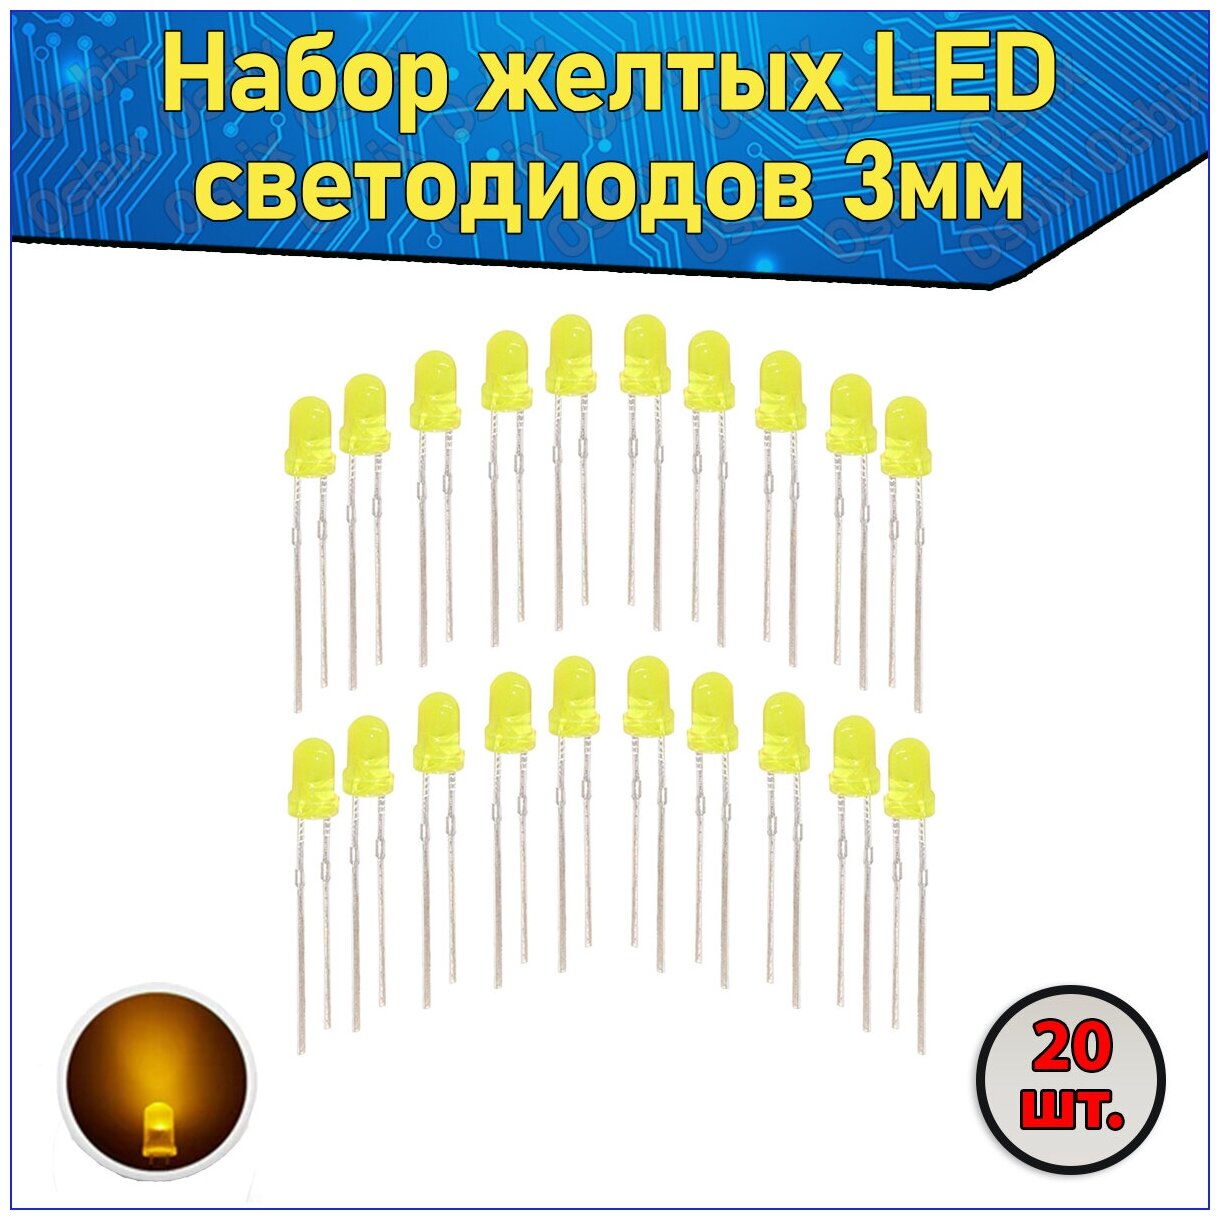 Набор желтых LED светодиодов 3мм 20 шт. с короткими ножками & Комплект F3 LED diode